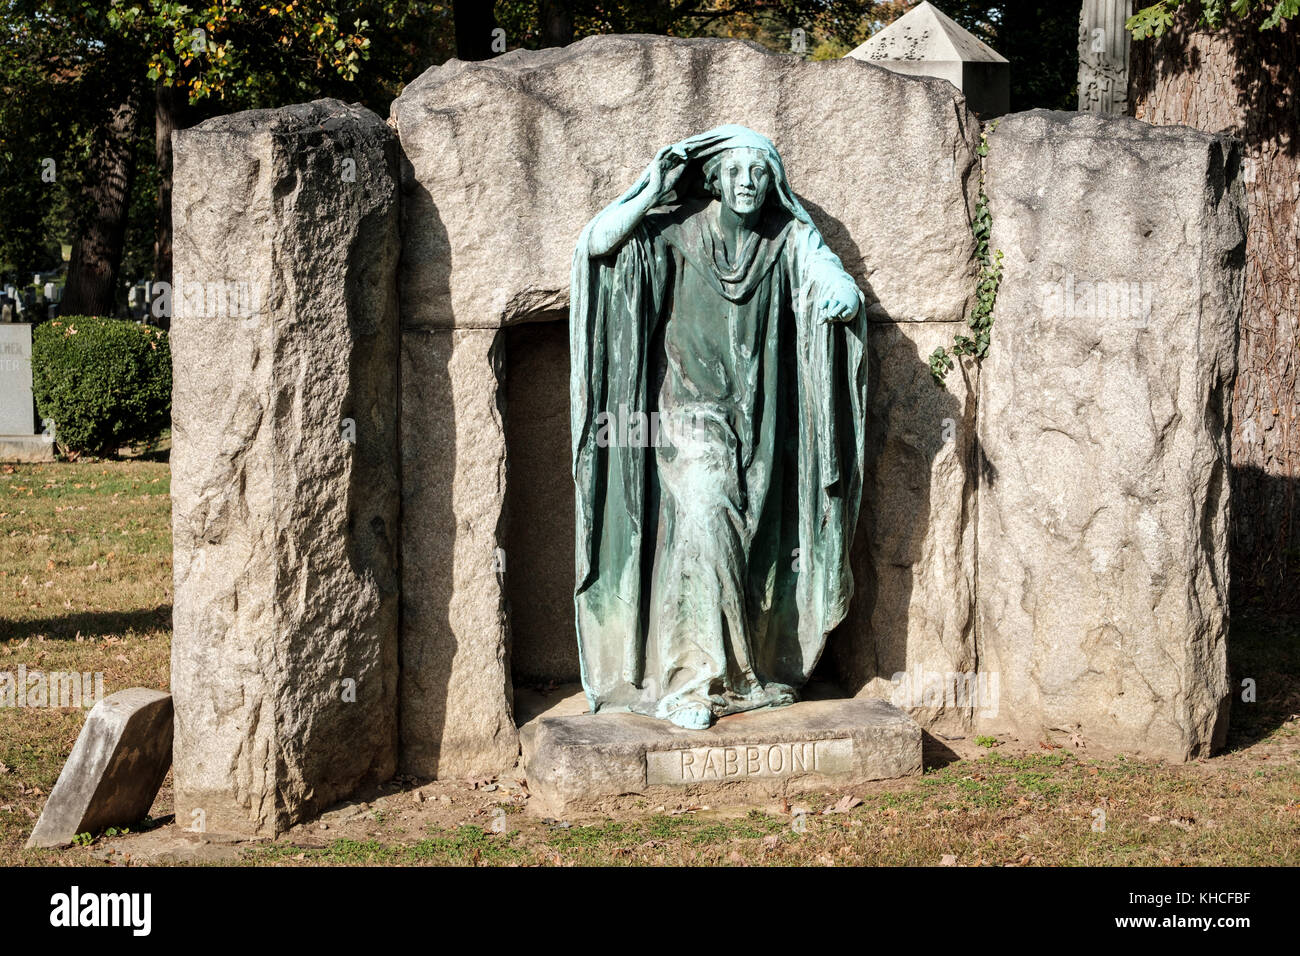 Rabboni-Ffoulke Memorial, Grab Marker von Charles Matthews Ffoulke in Rock Creek Cemetery, nach Künstler Gutzon Borglum, Washington, D.C., USA. Stockfoto